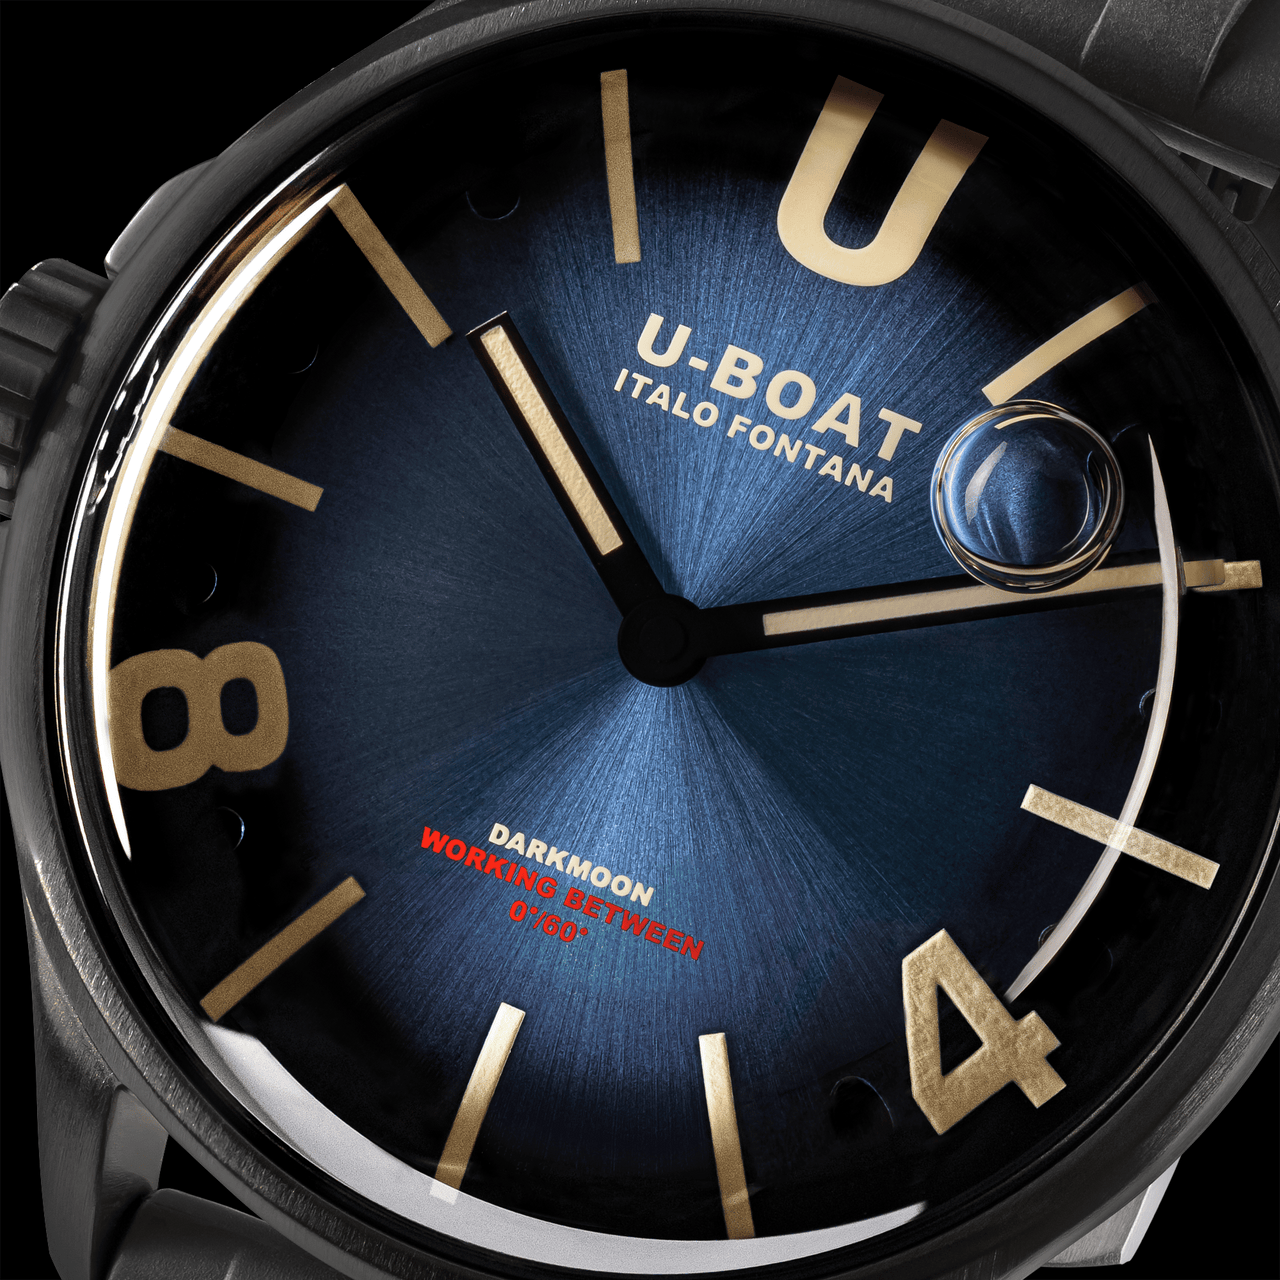 U-Boat Watch Darkmoon 40 Blue Soleil Black PVD 9020/B